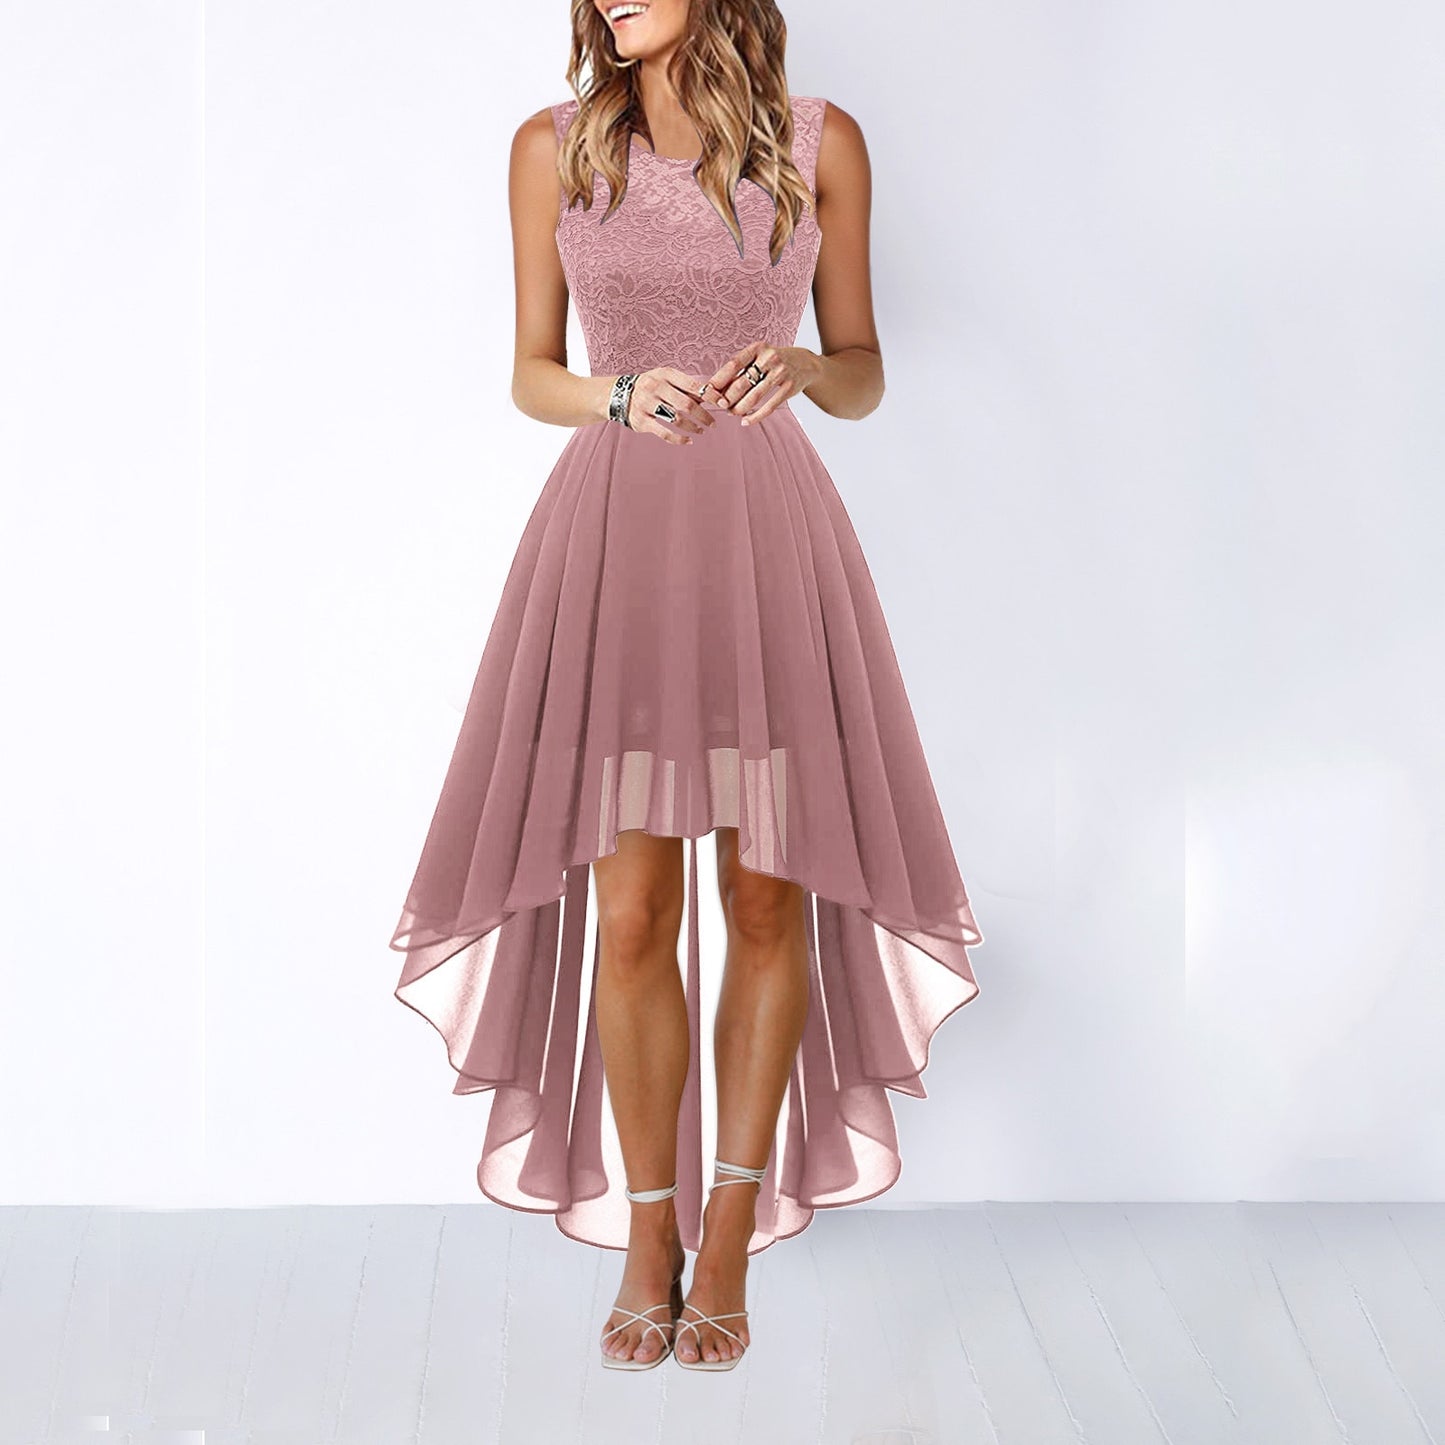 Pink high low dresses formal